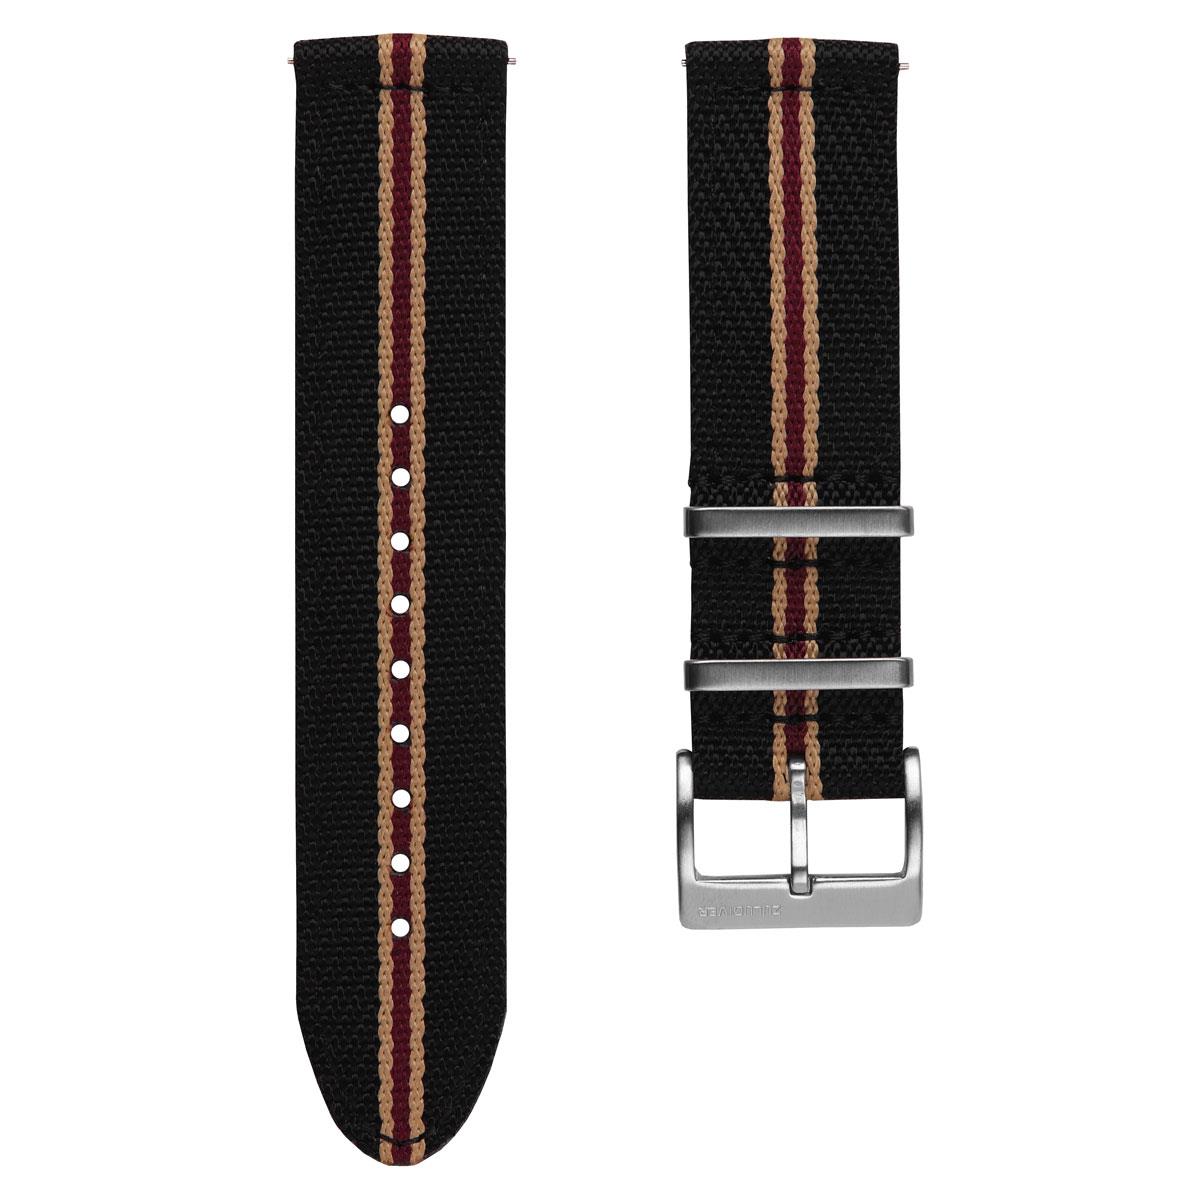 Seasalter Military Nylon Watch Strap - Black/Brown/Red